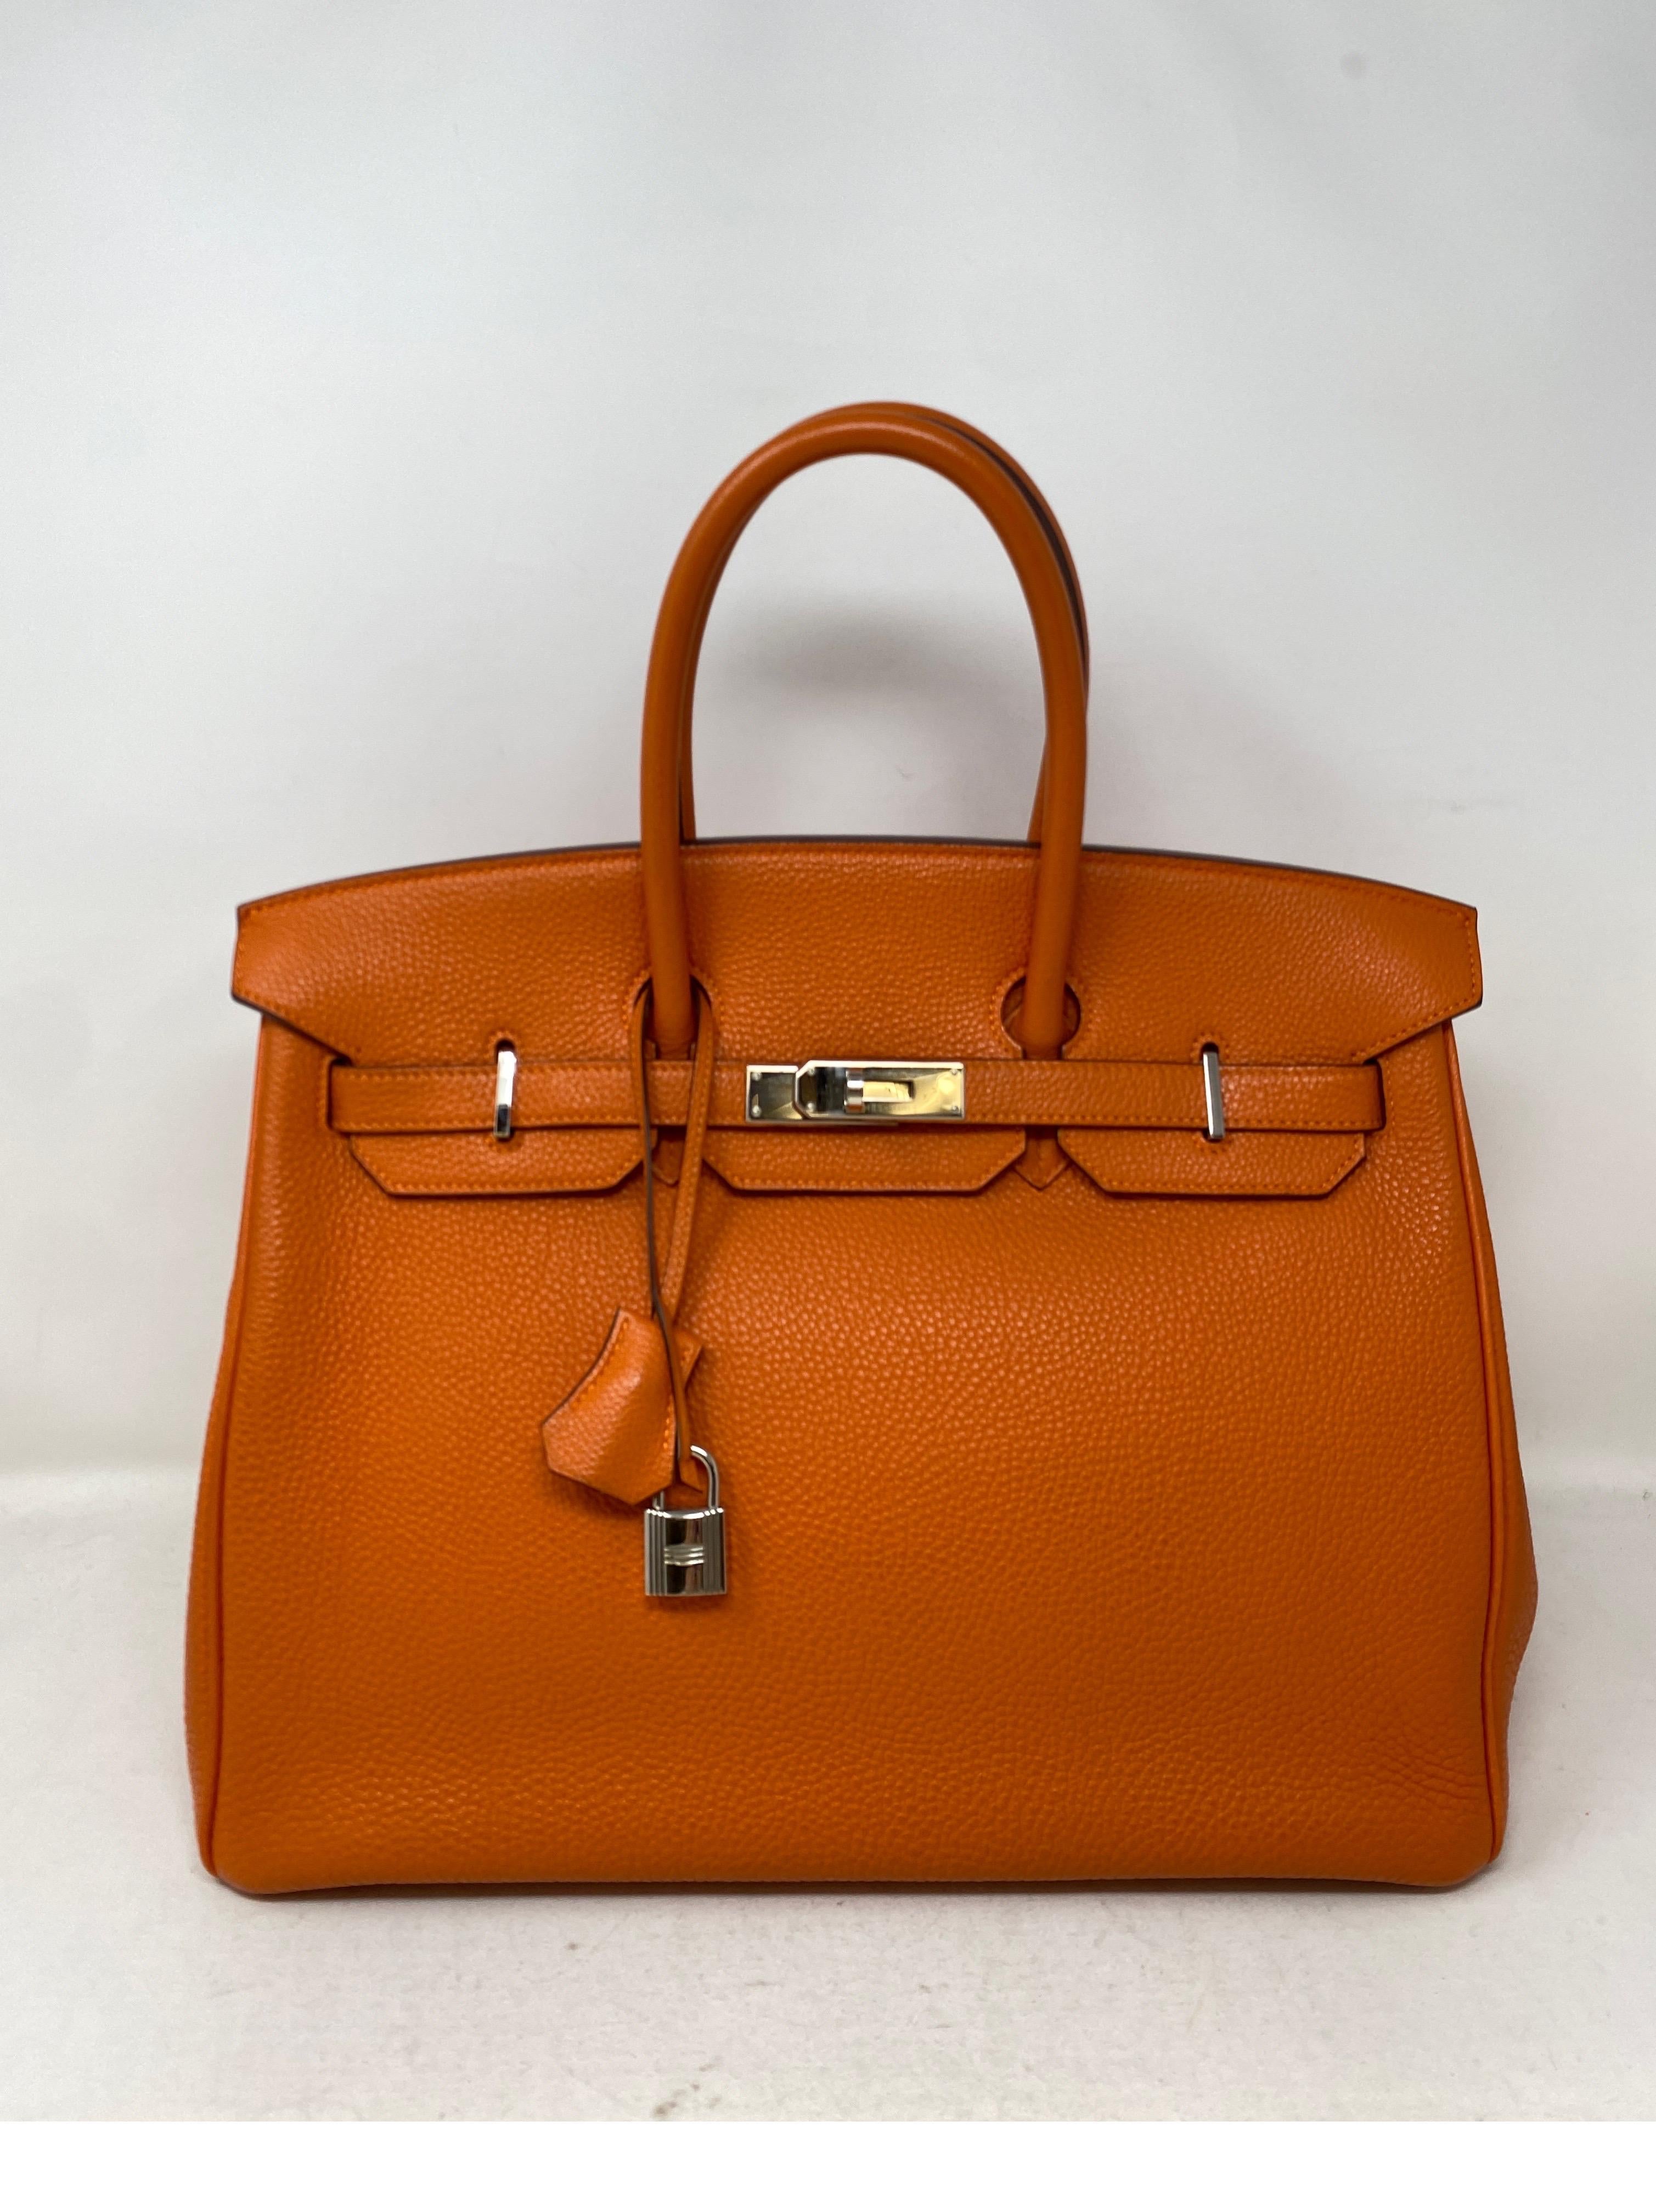 Hermes Orange Birkin 35 Bag. Classic Hermes Orange color with silver palladium hardware. Good condition. Interior clean. Includes clochette, lock, keys, and dust bag. Guaranteed authentic. 